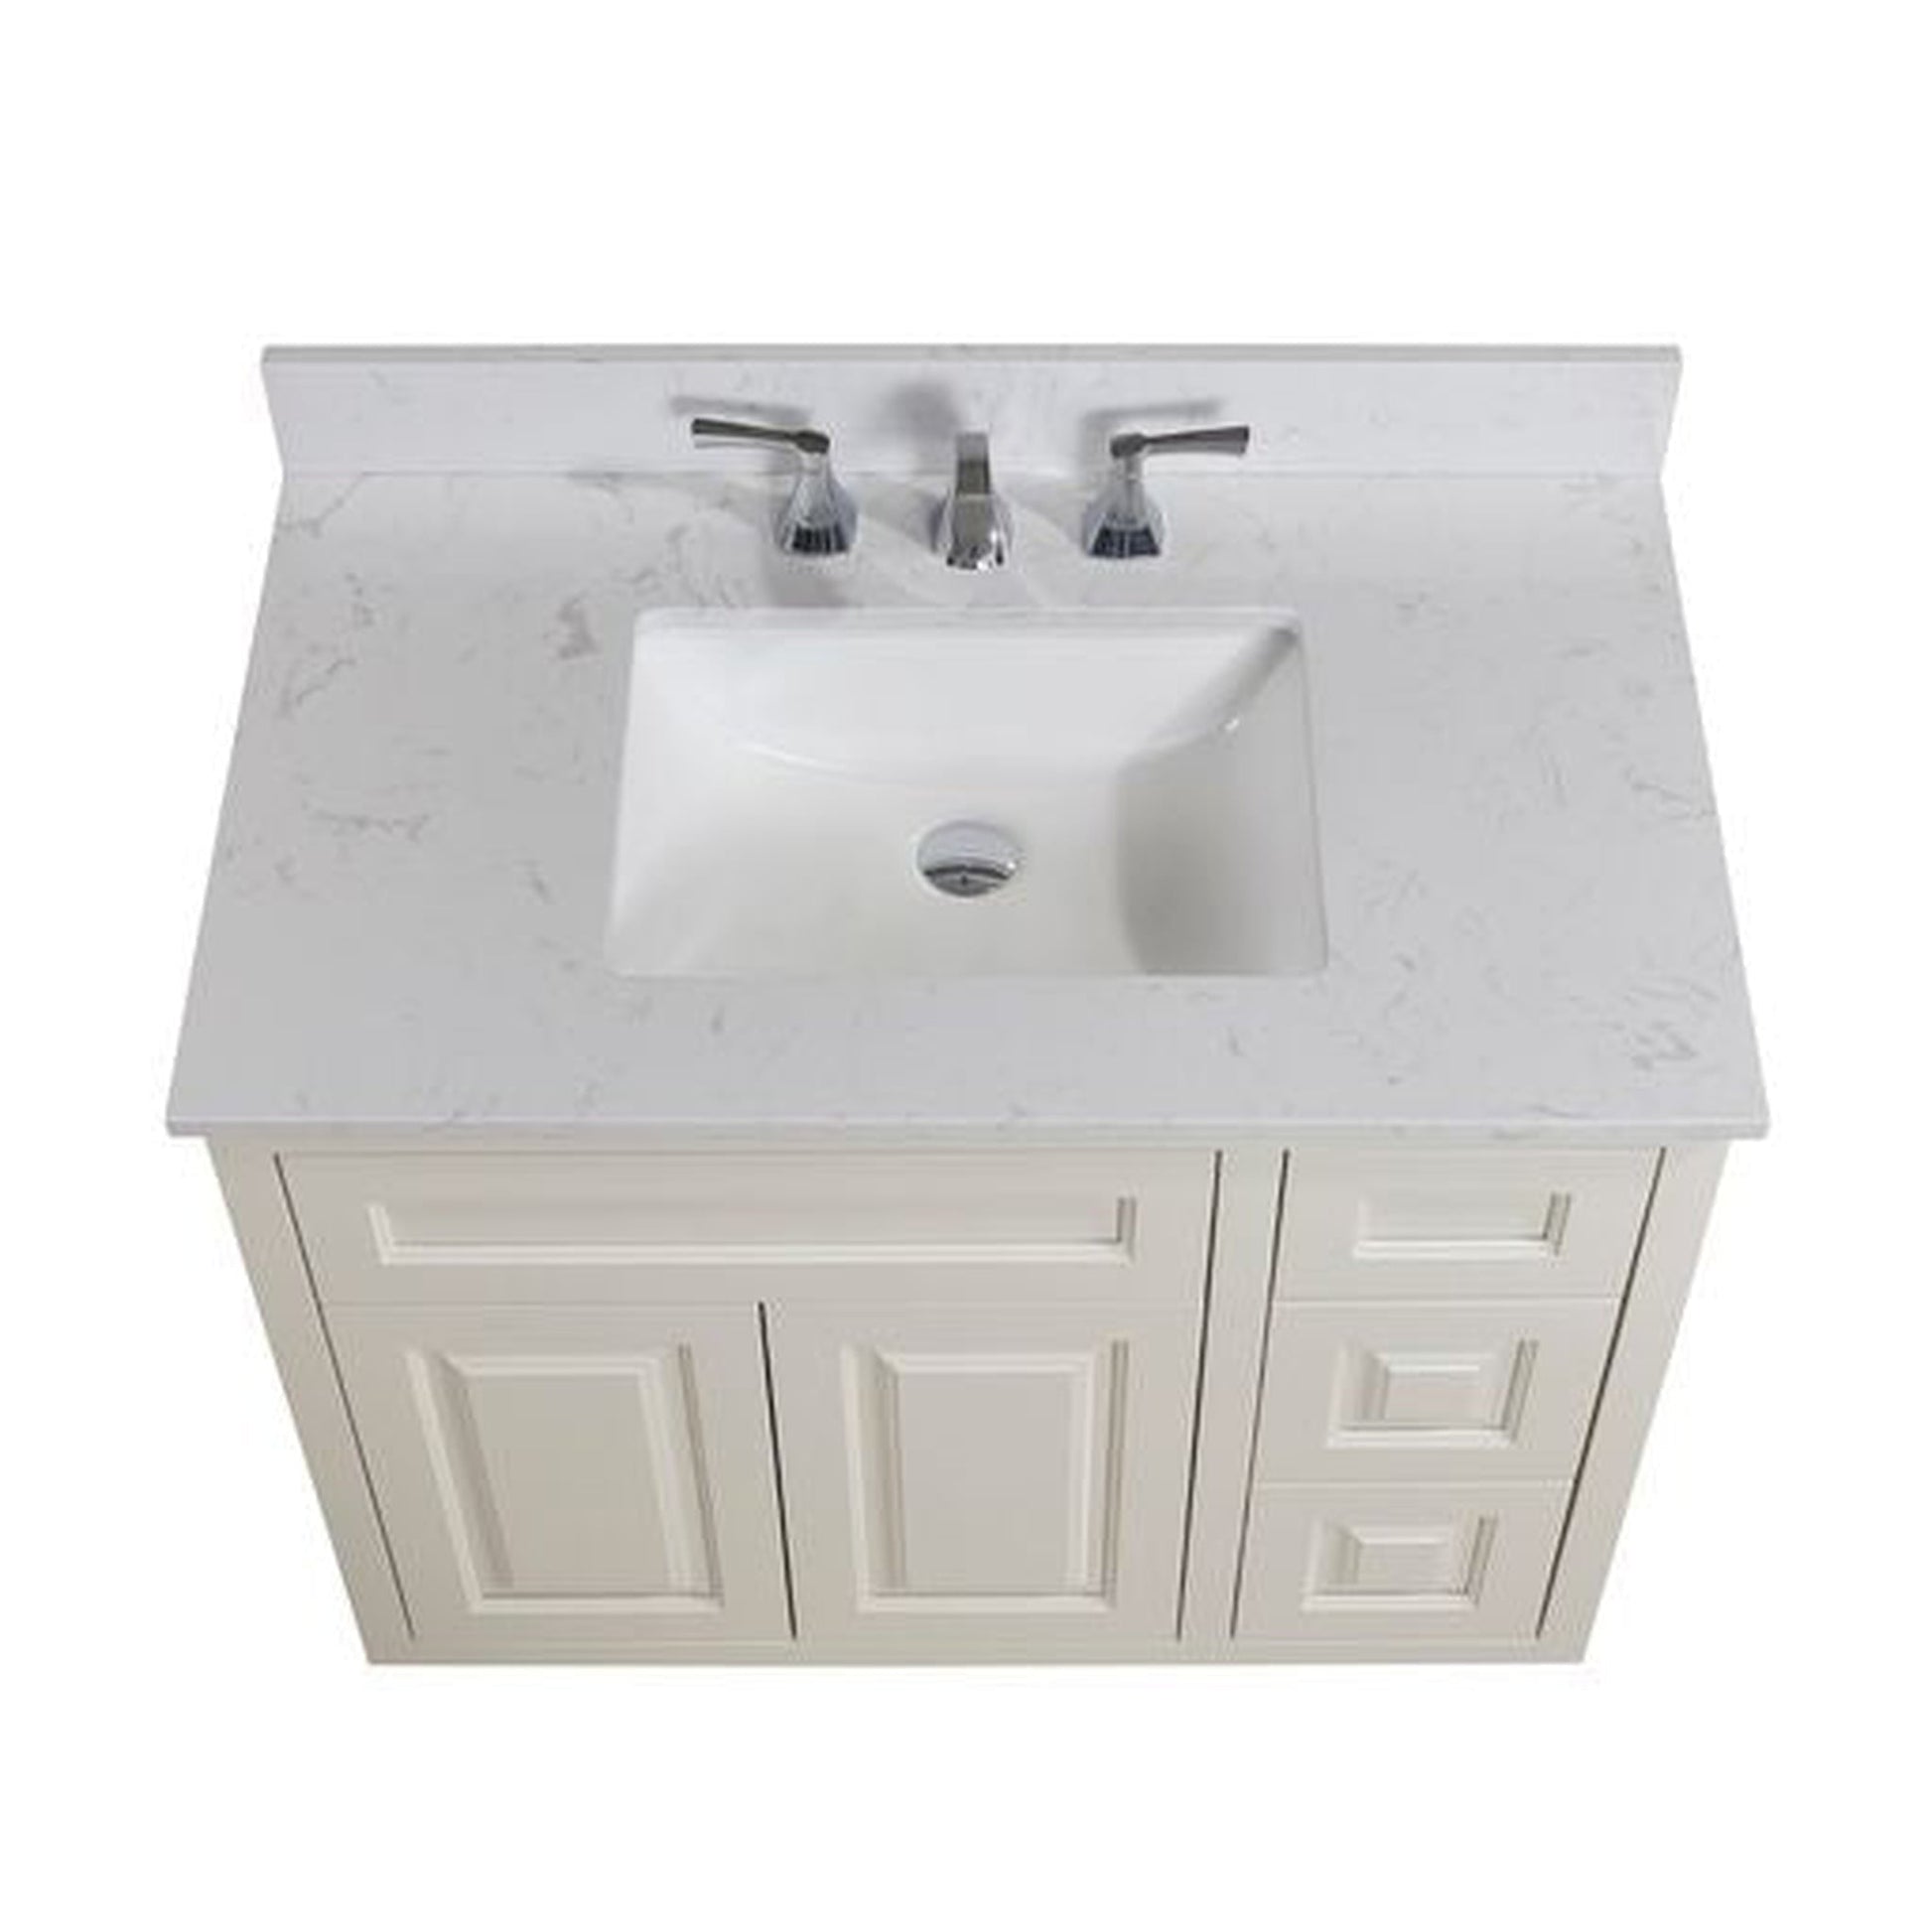 Altair Frosinone 37" x 22" Jazz White Composite Stone Bathroom Vanity Top With White SInk